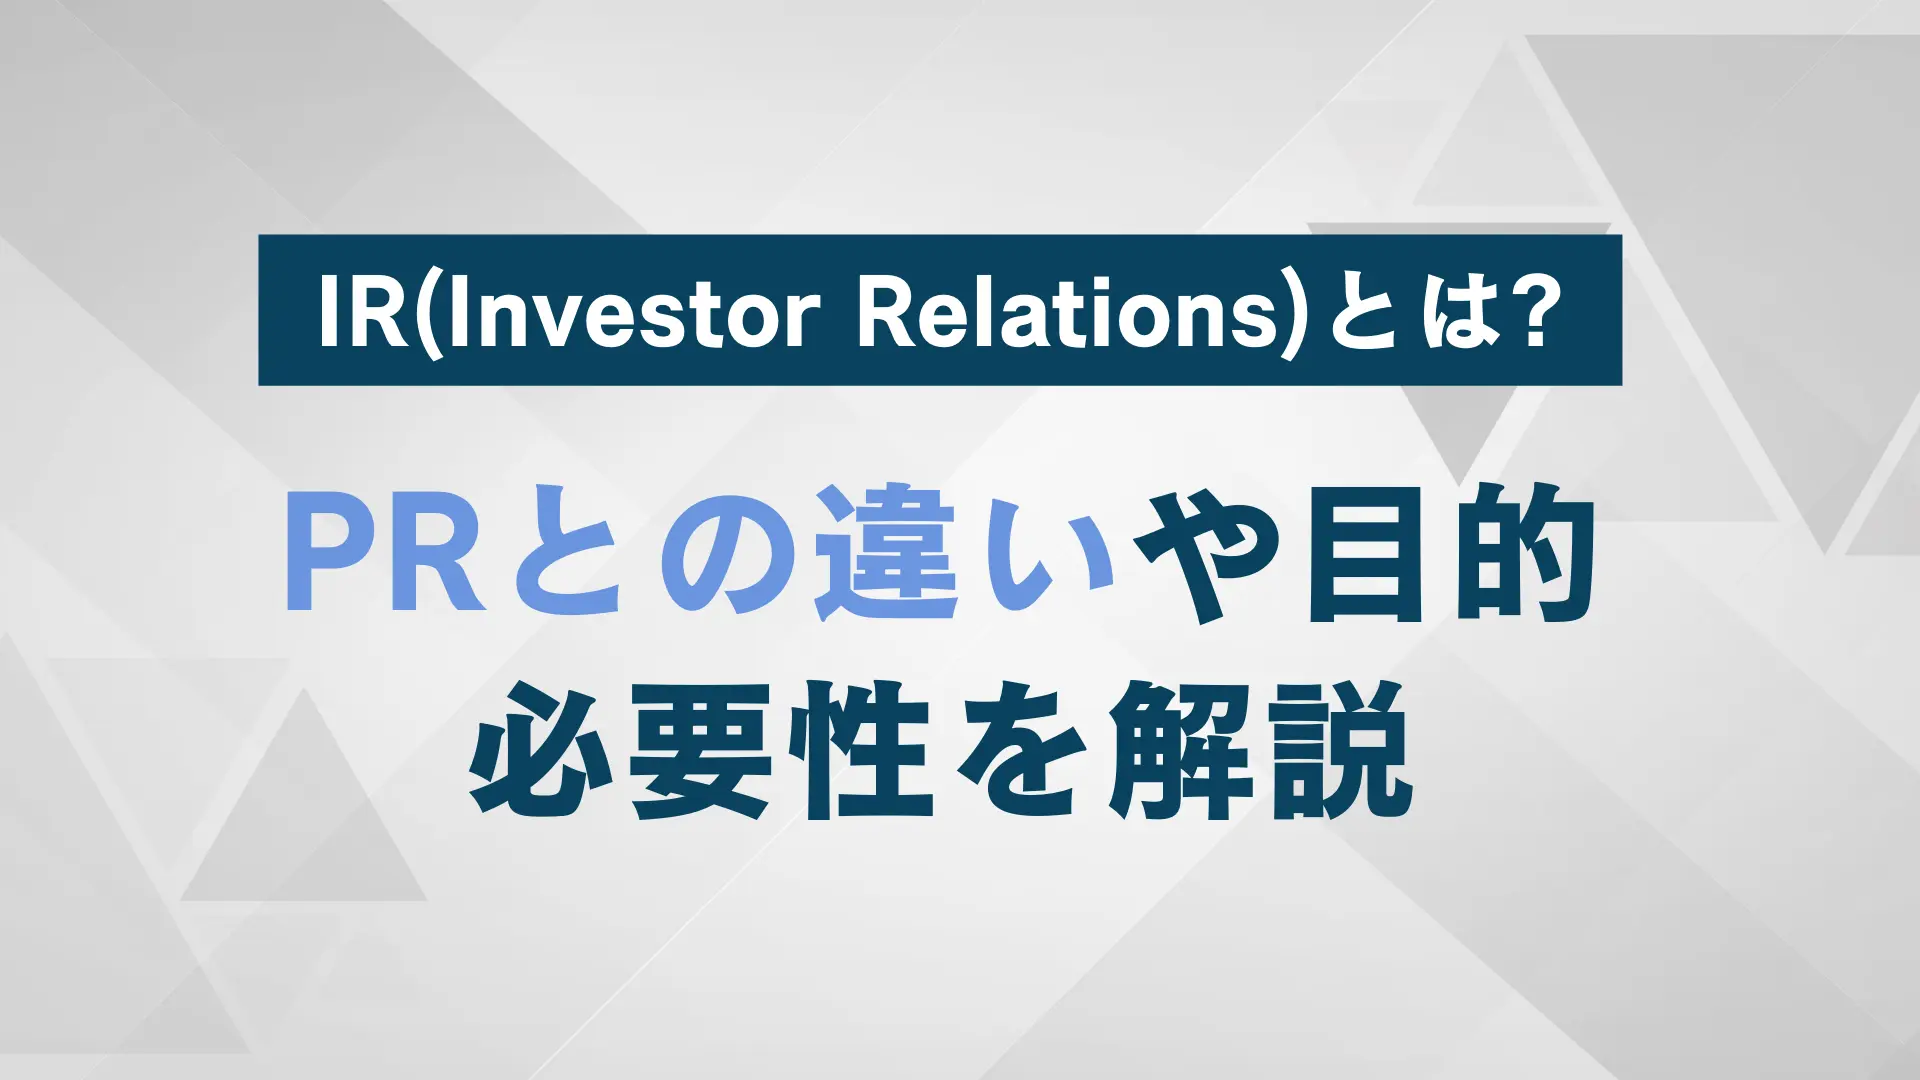 IR（Investor Relations）とは？PRとの違い、目的、そして必要性を解説